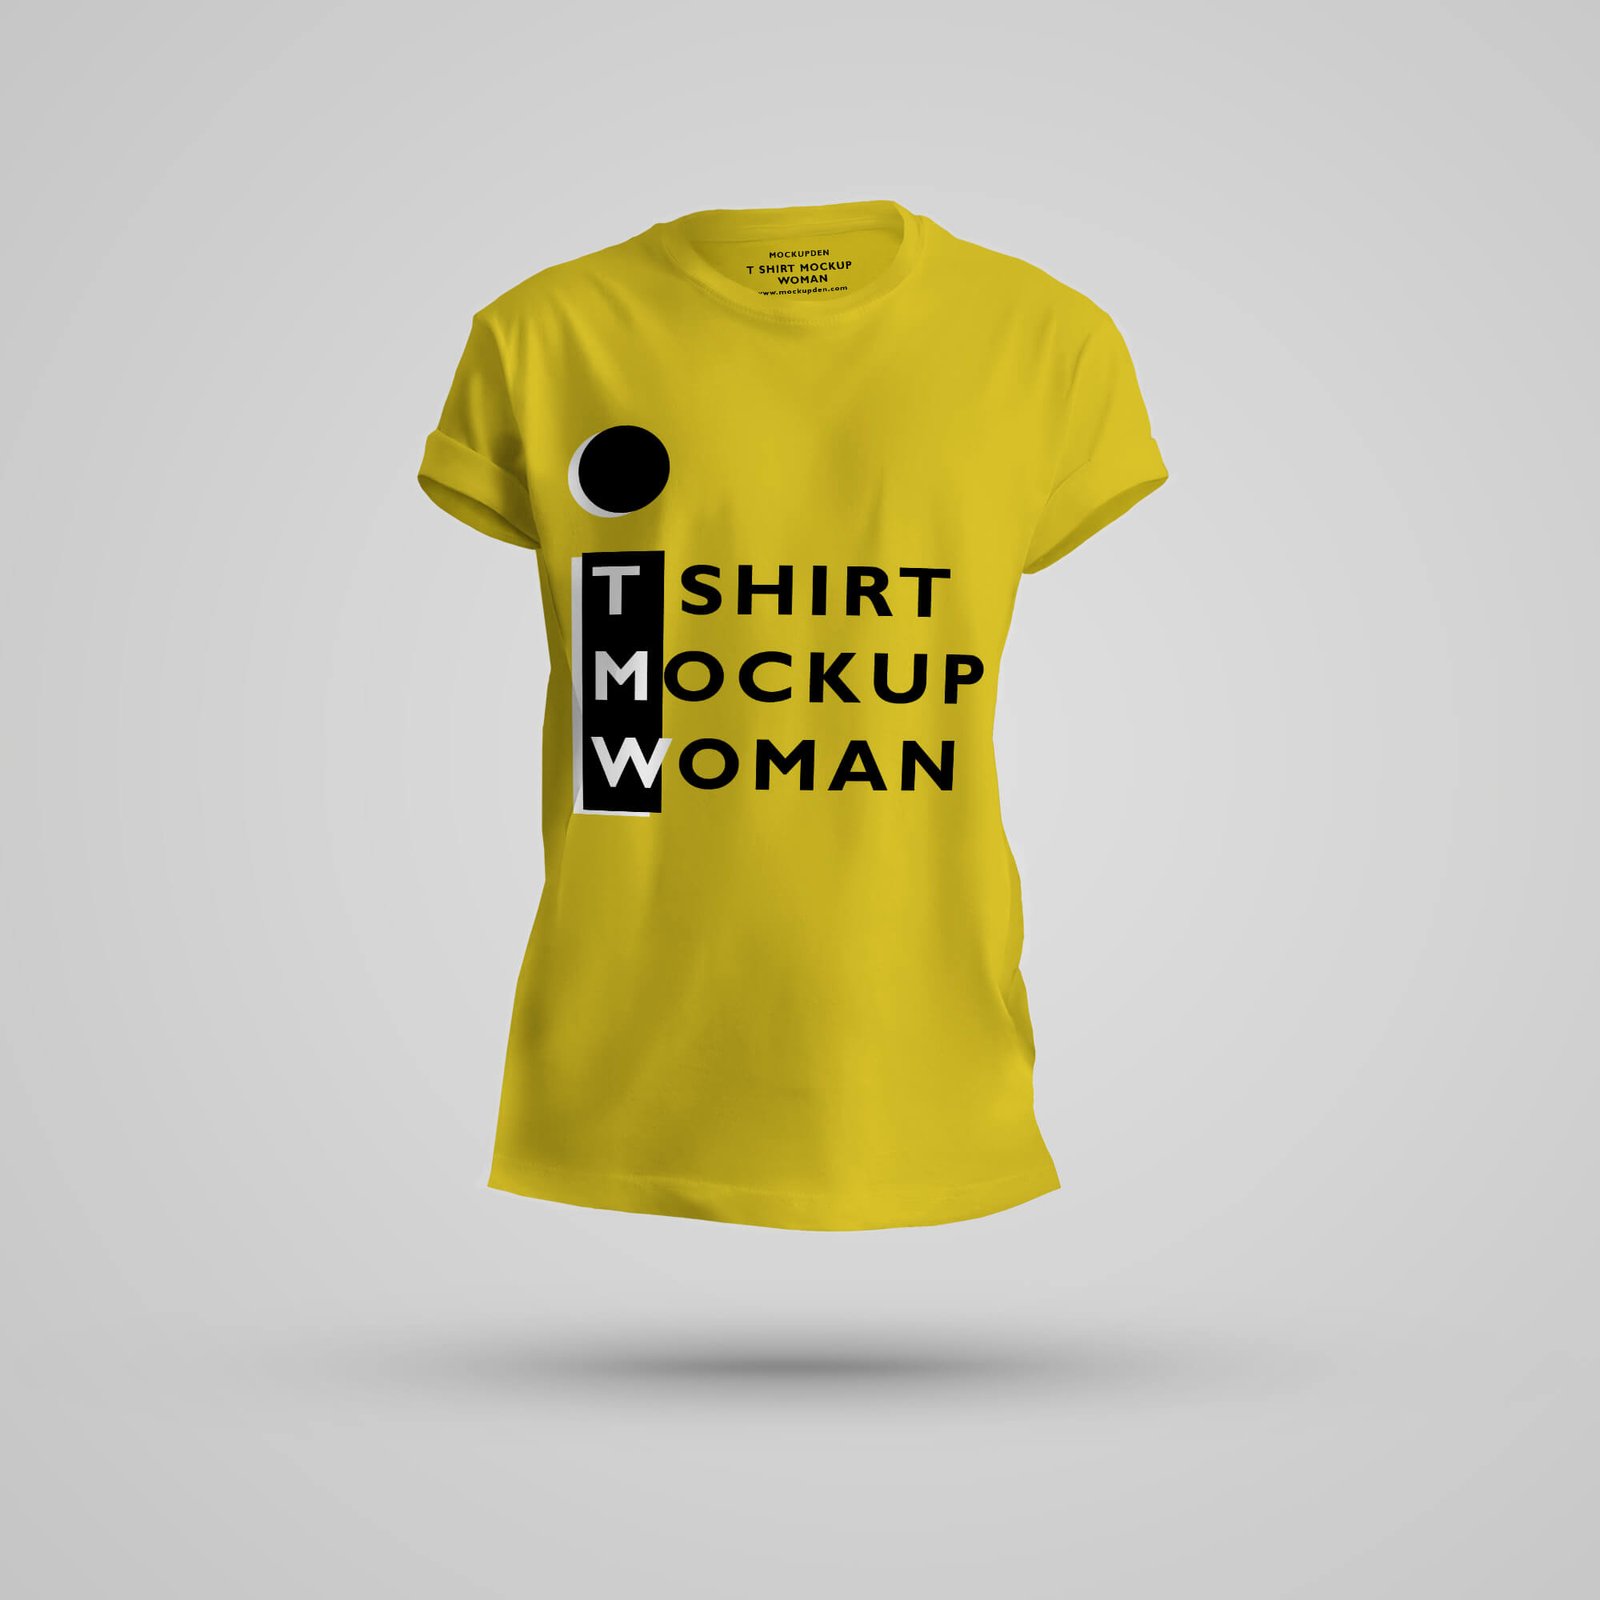 Download Free T Shirt Mockup Women PSD Template - Mockup Den